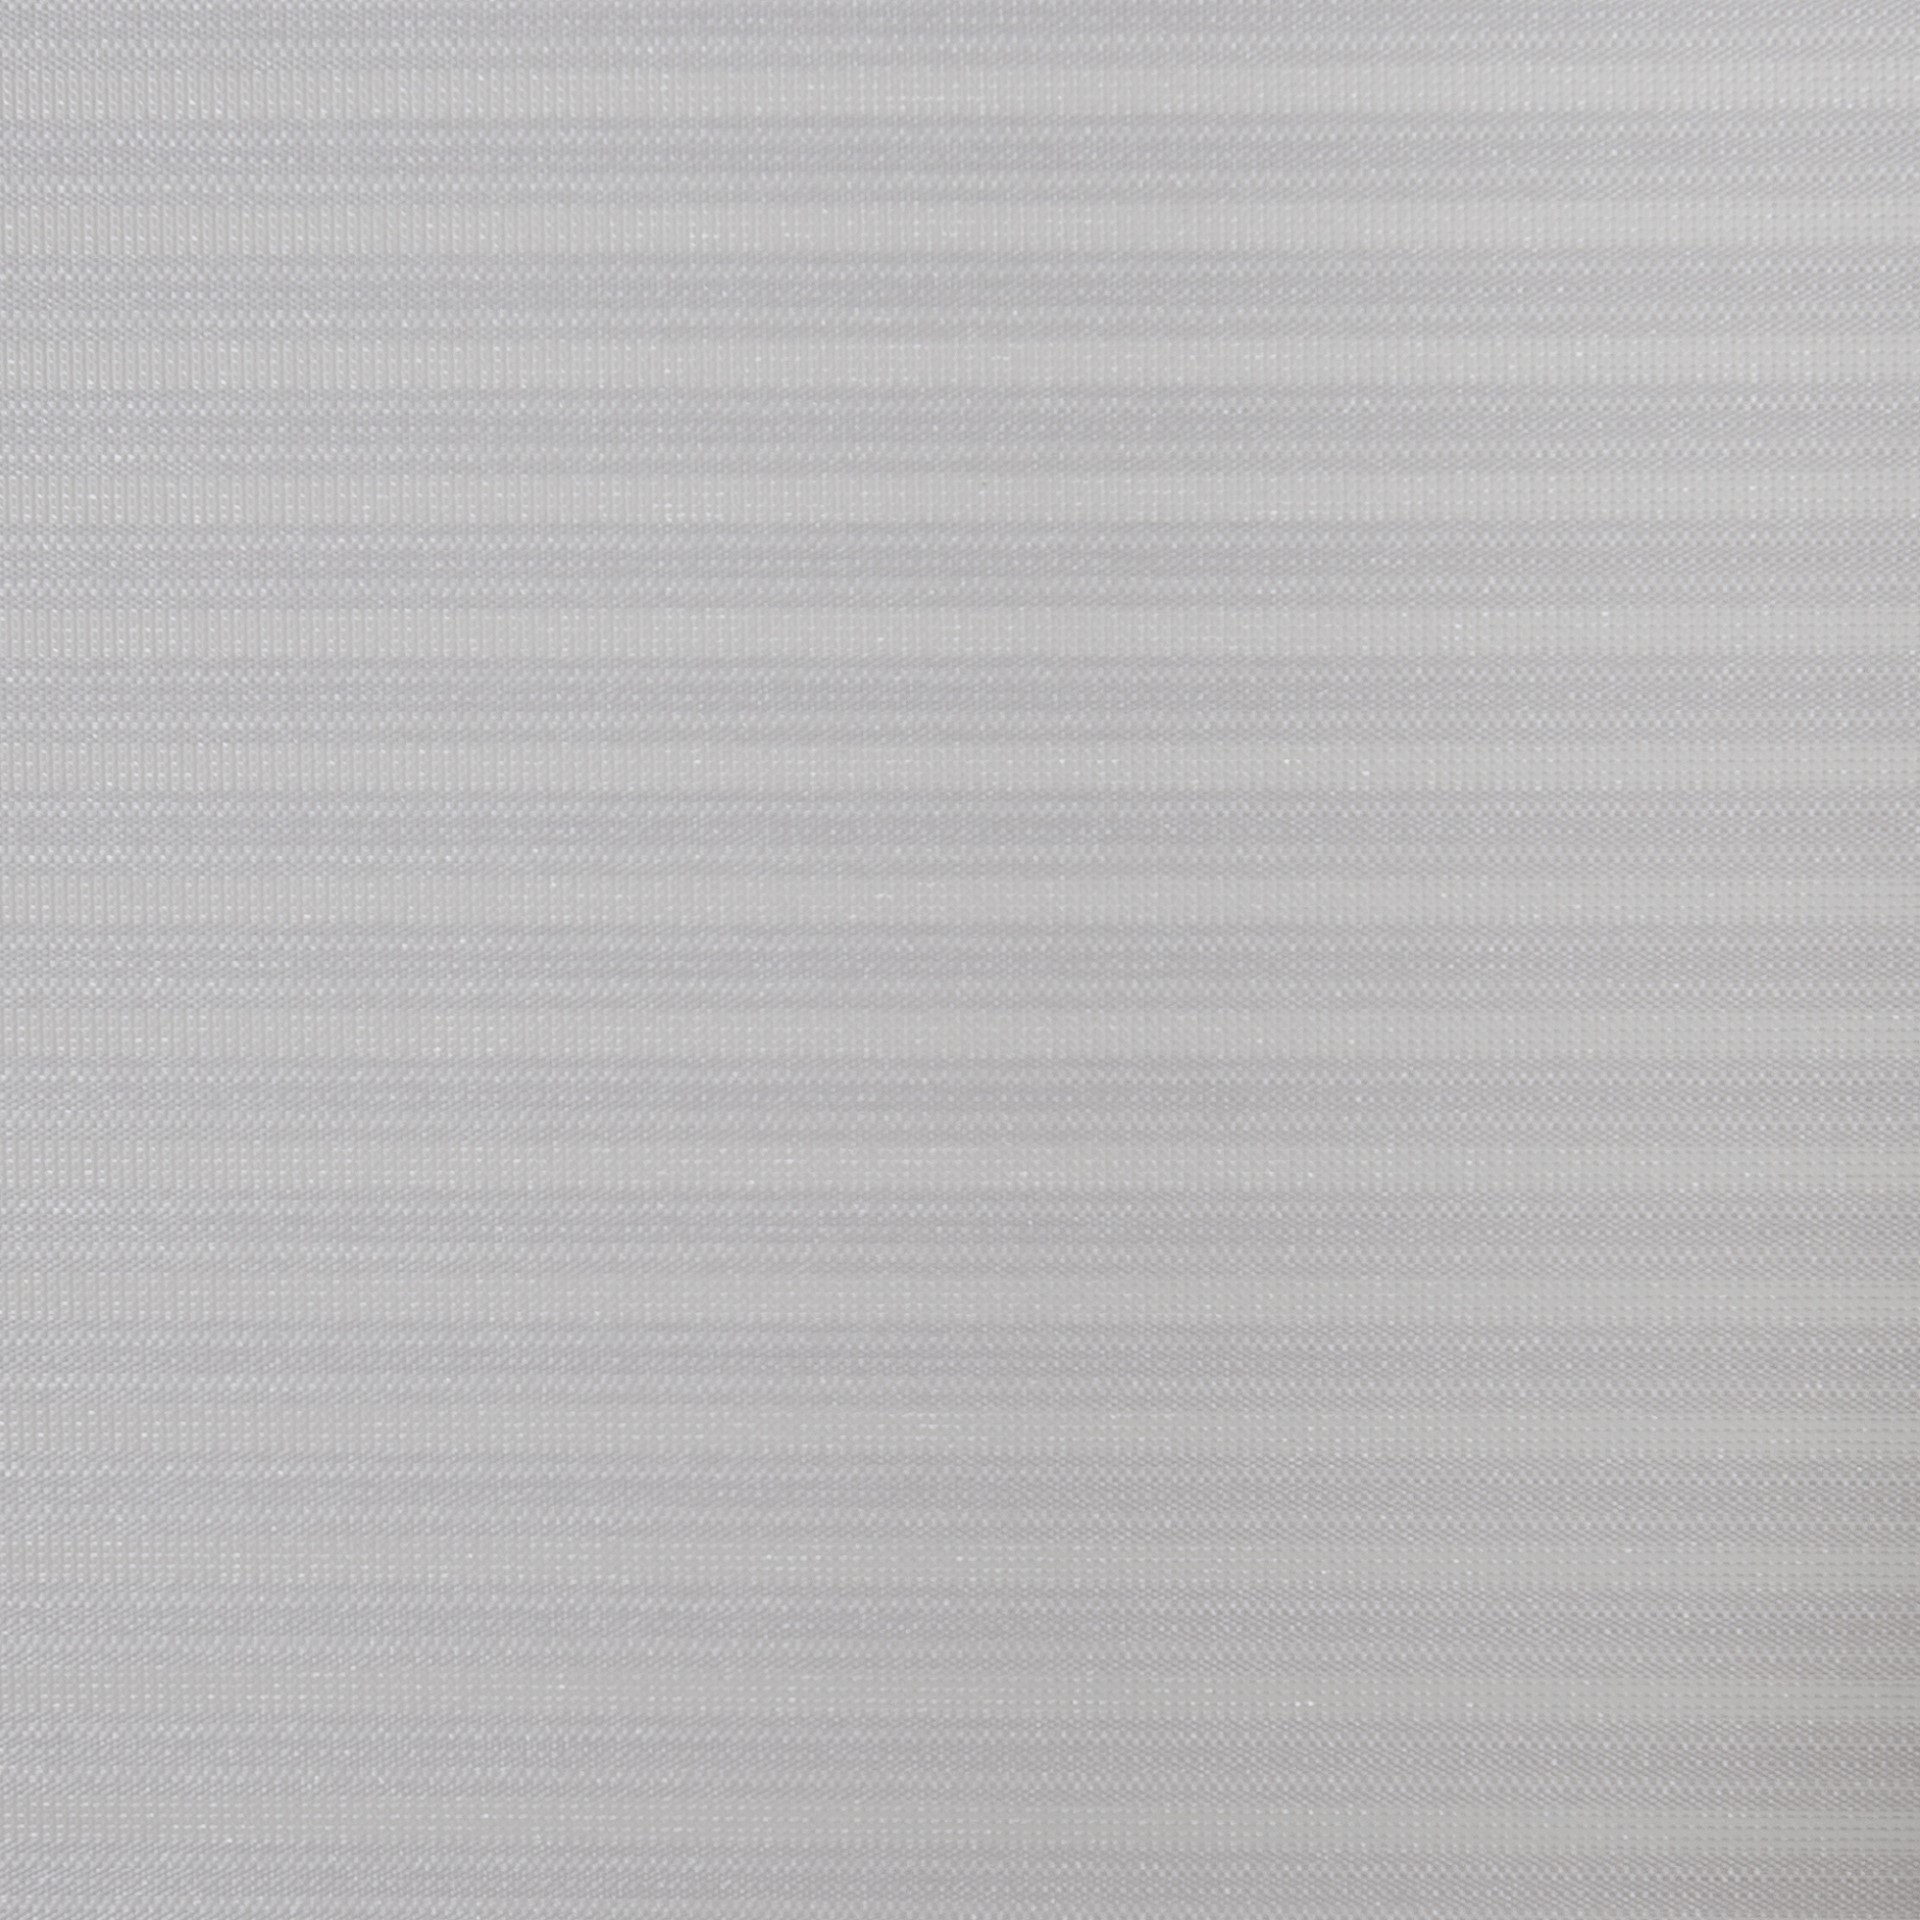 Cebra Translucent Roller Blind White Fabric Detail